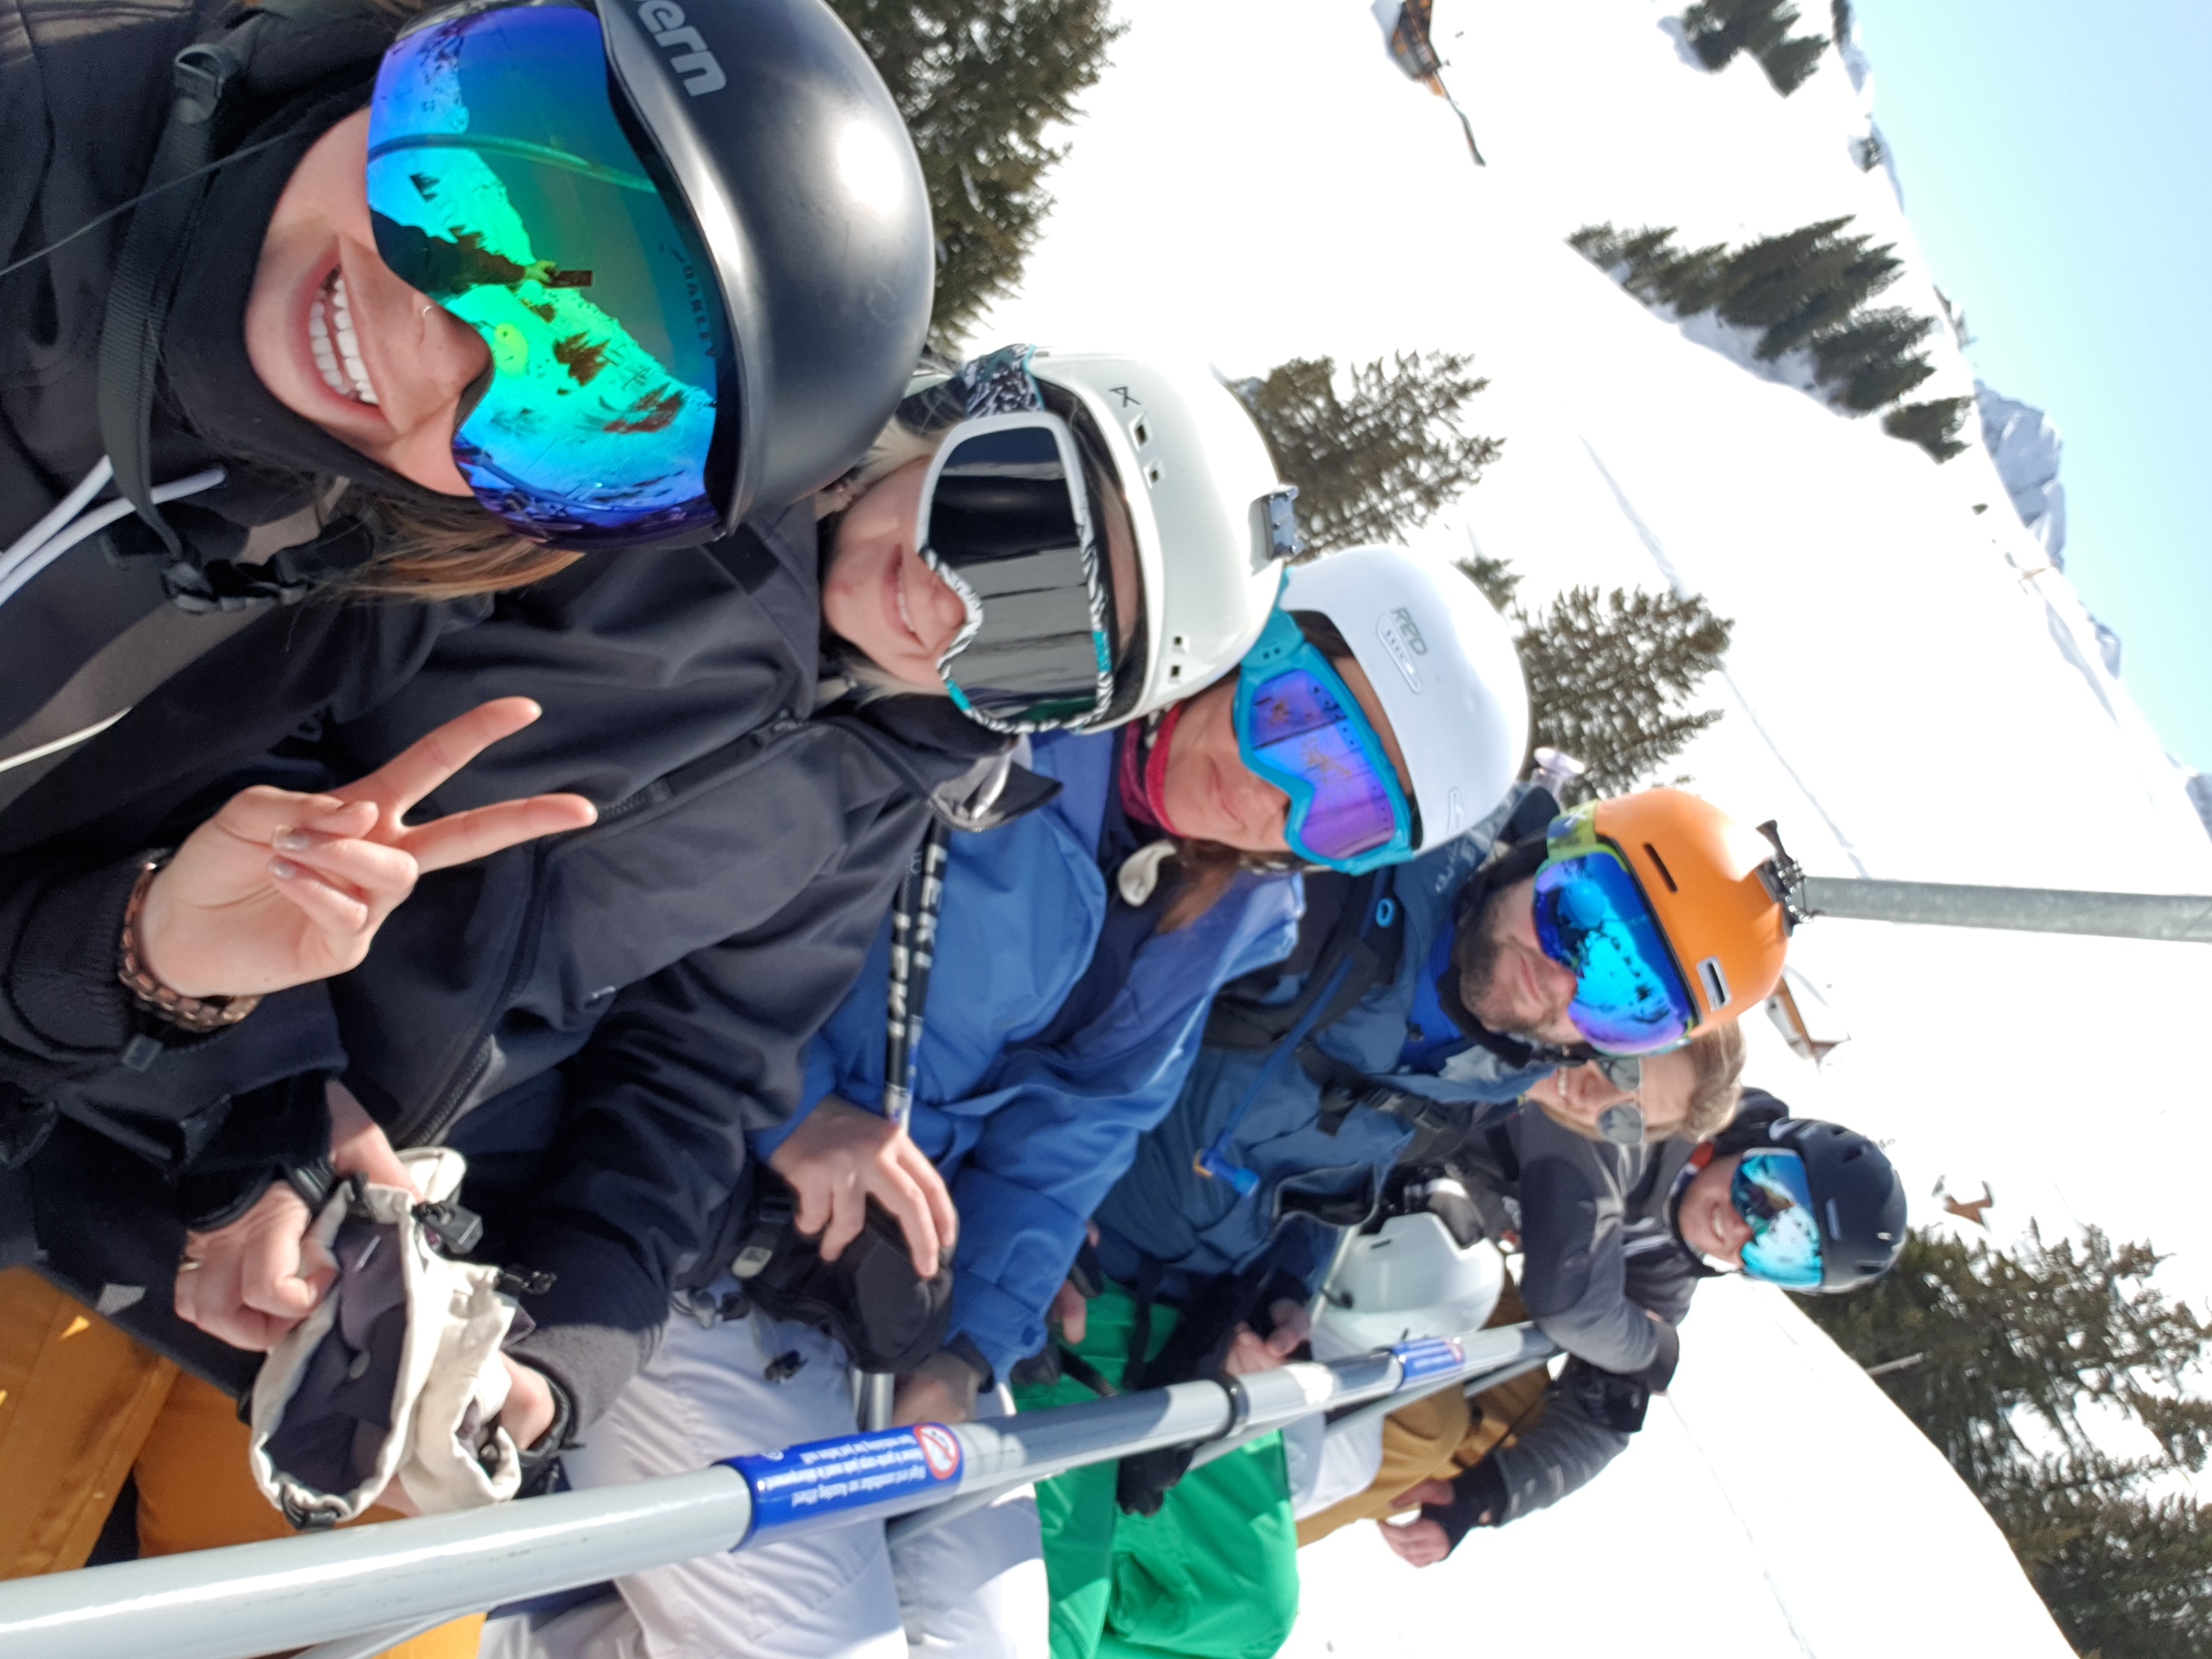 New ski lifts in Avoriaz for Dec 2019